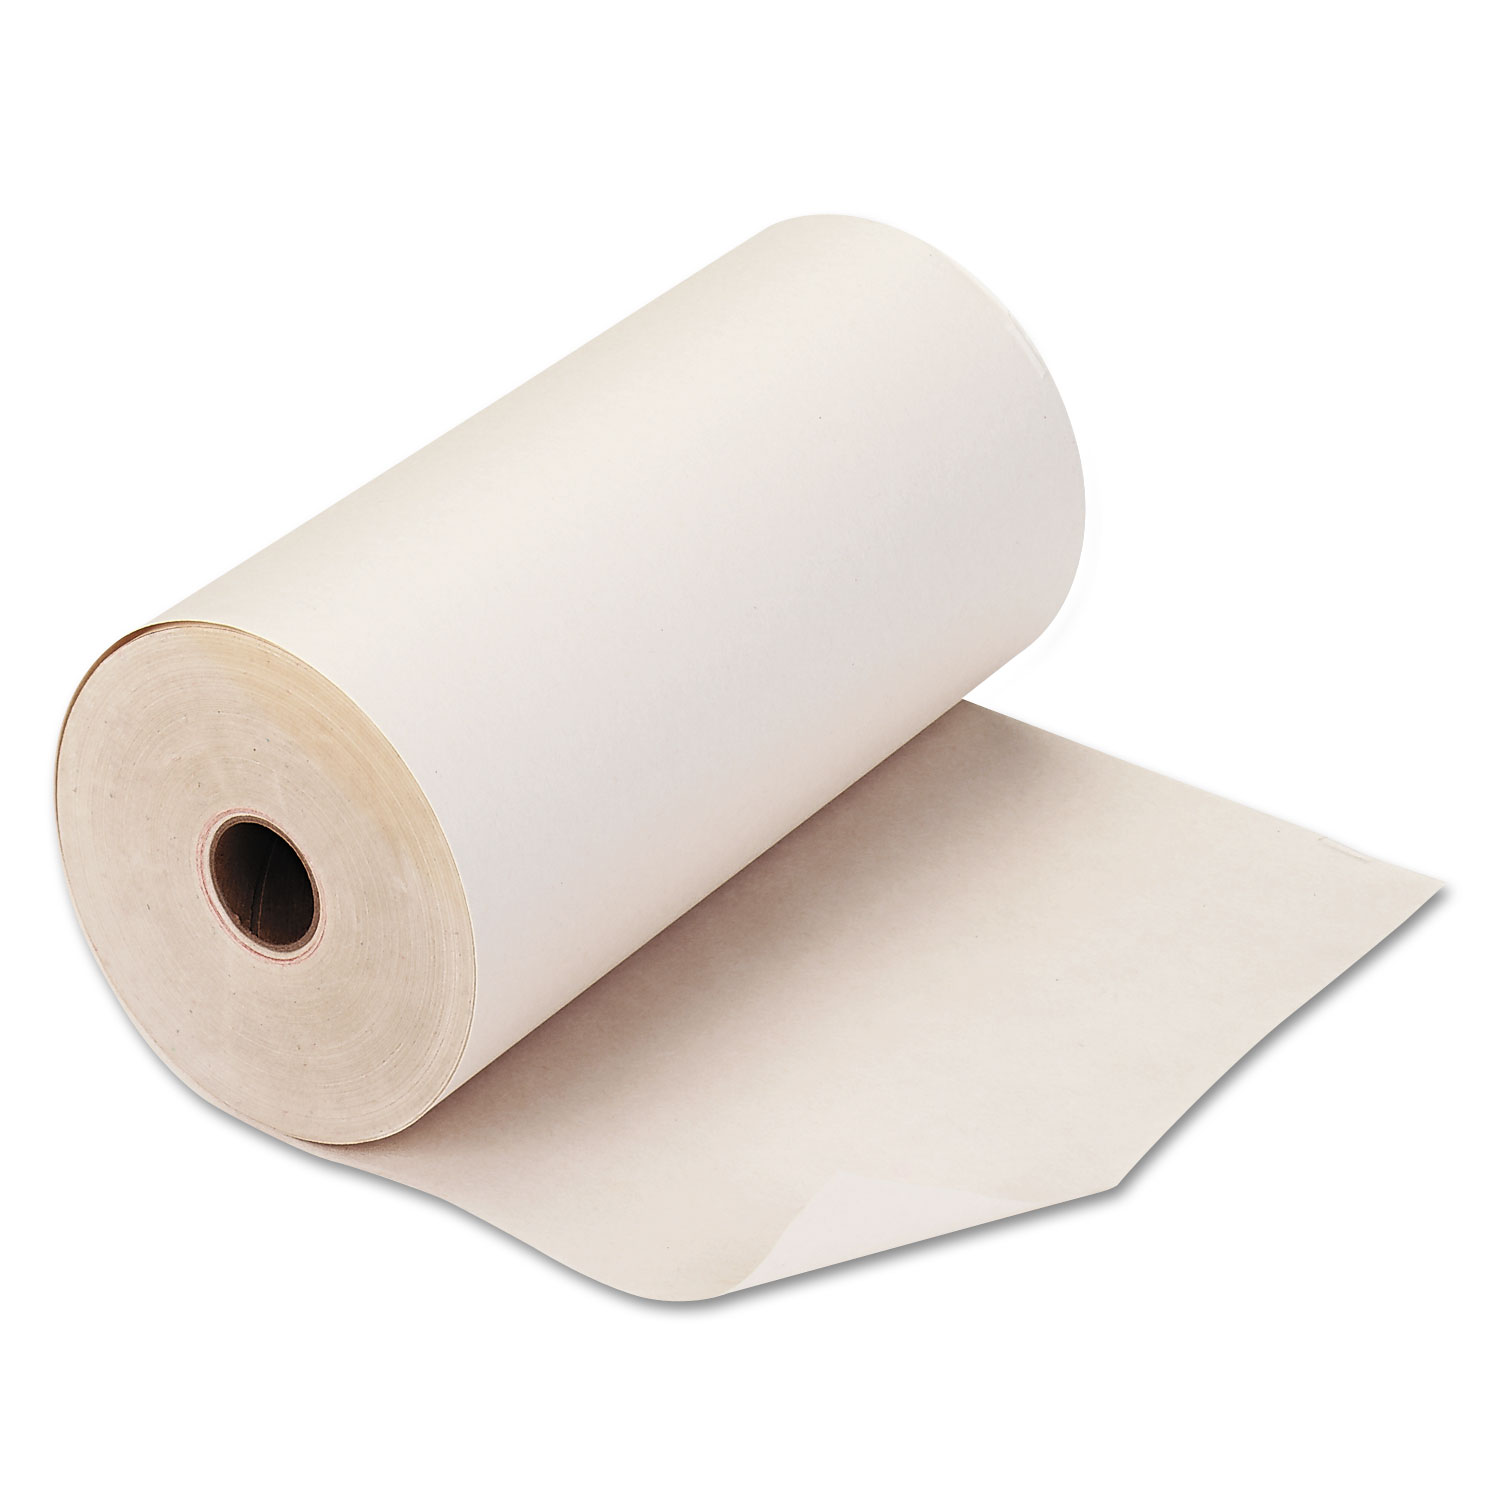  Iconex 6210 Impact Bond Paper Rolls, 8.44 x 235 ft, White (ICX90742200) 